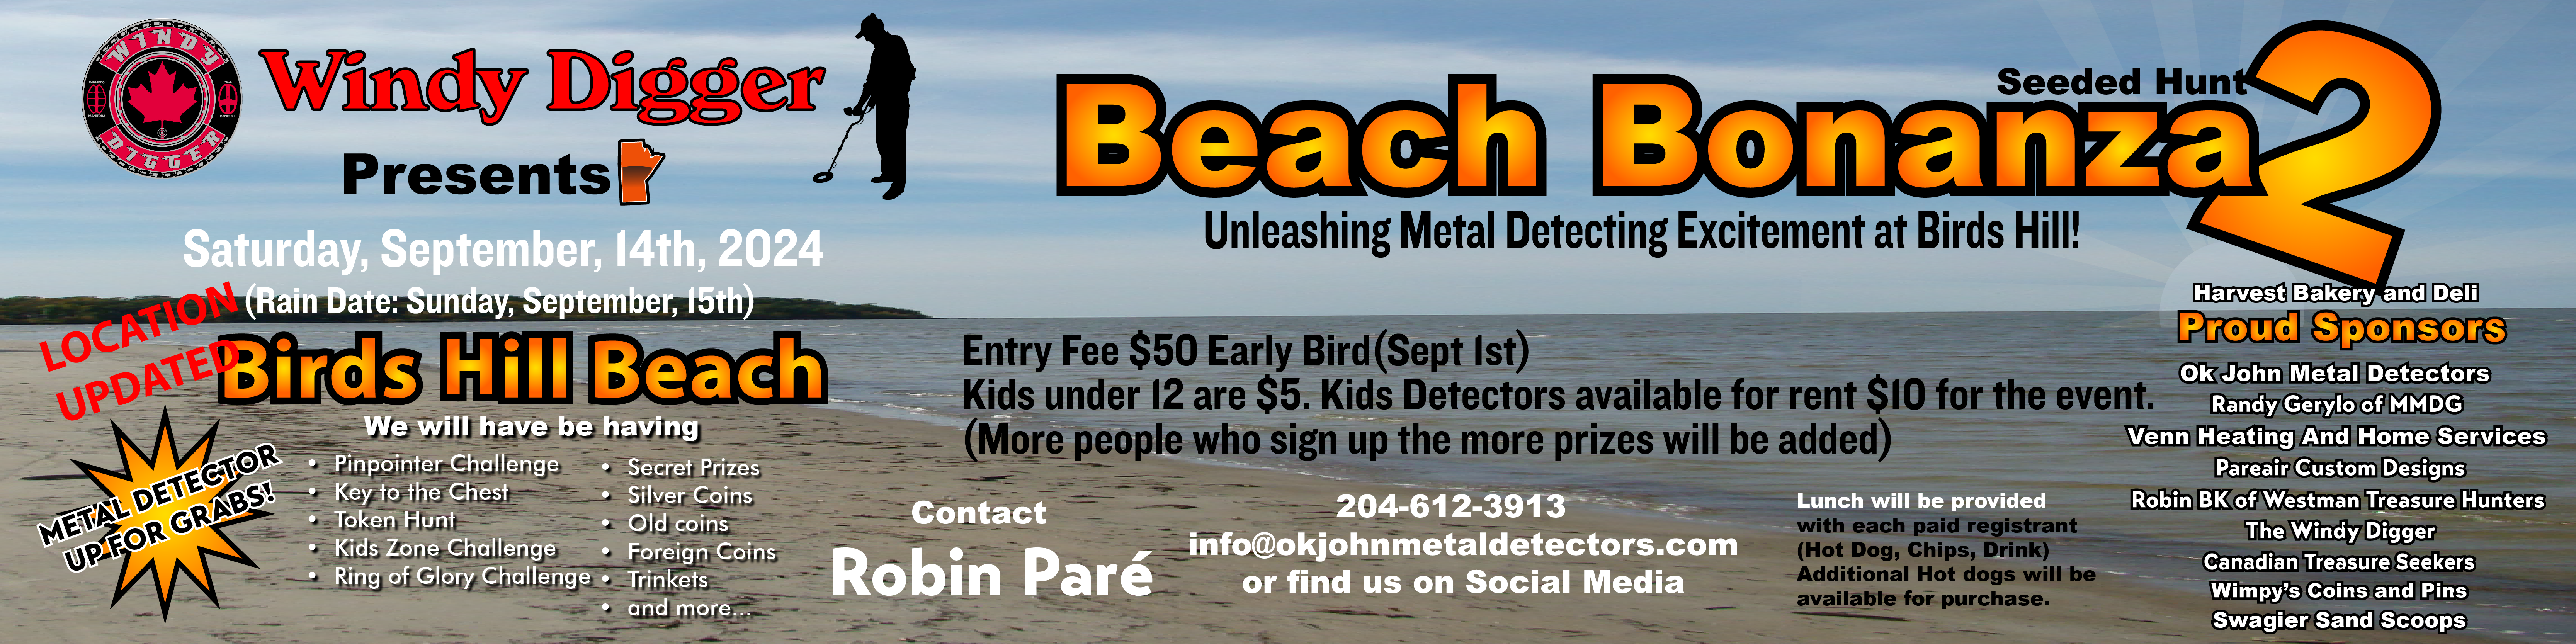 Beach Bonanza 2 Metal detecting event in Manitoba, Canada